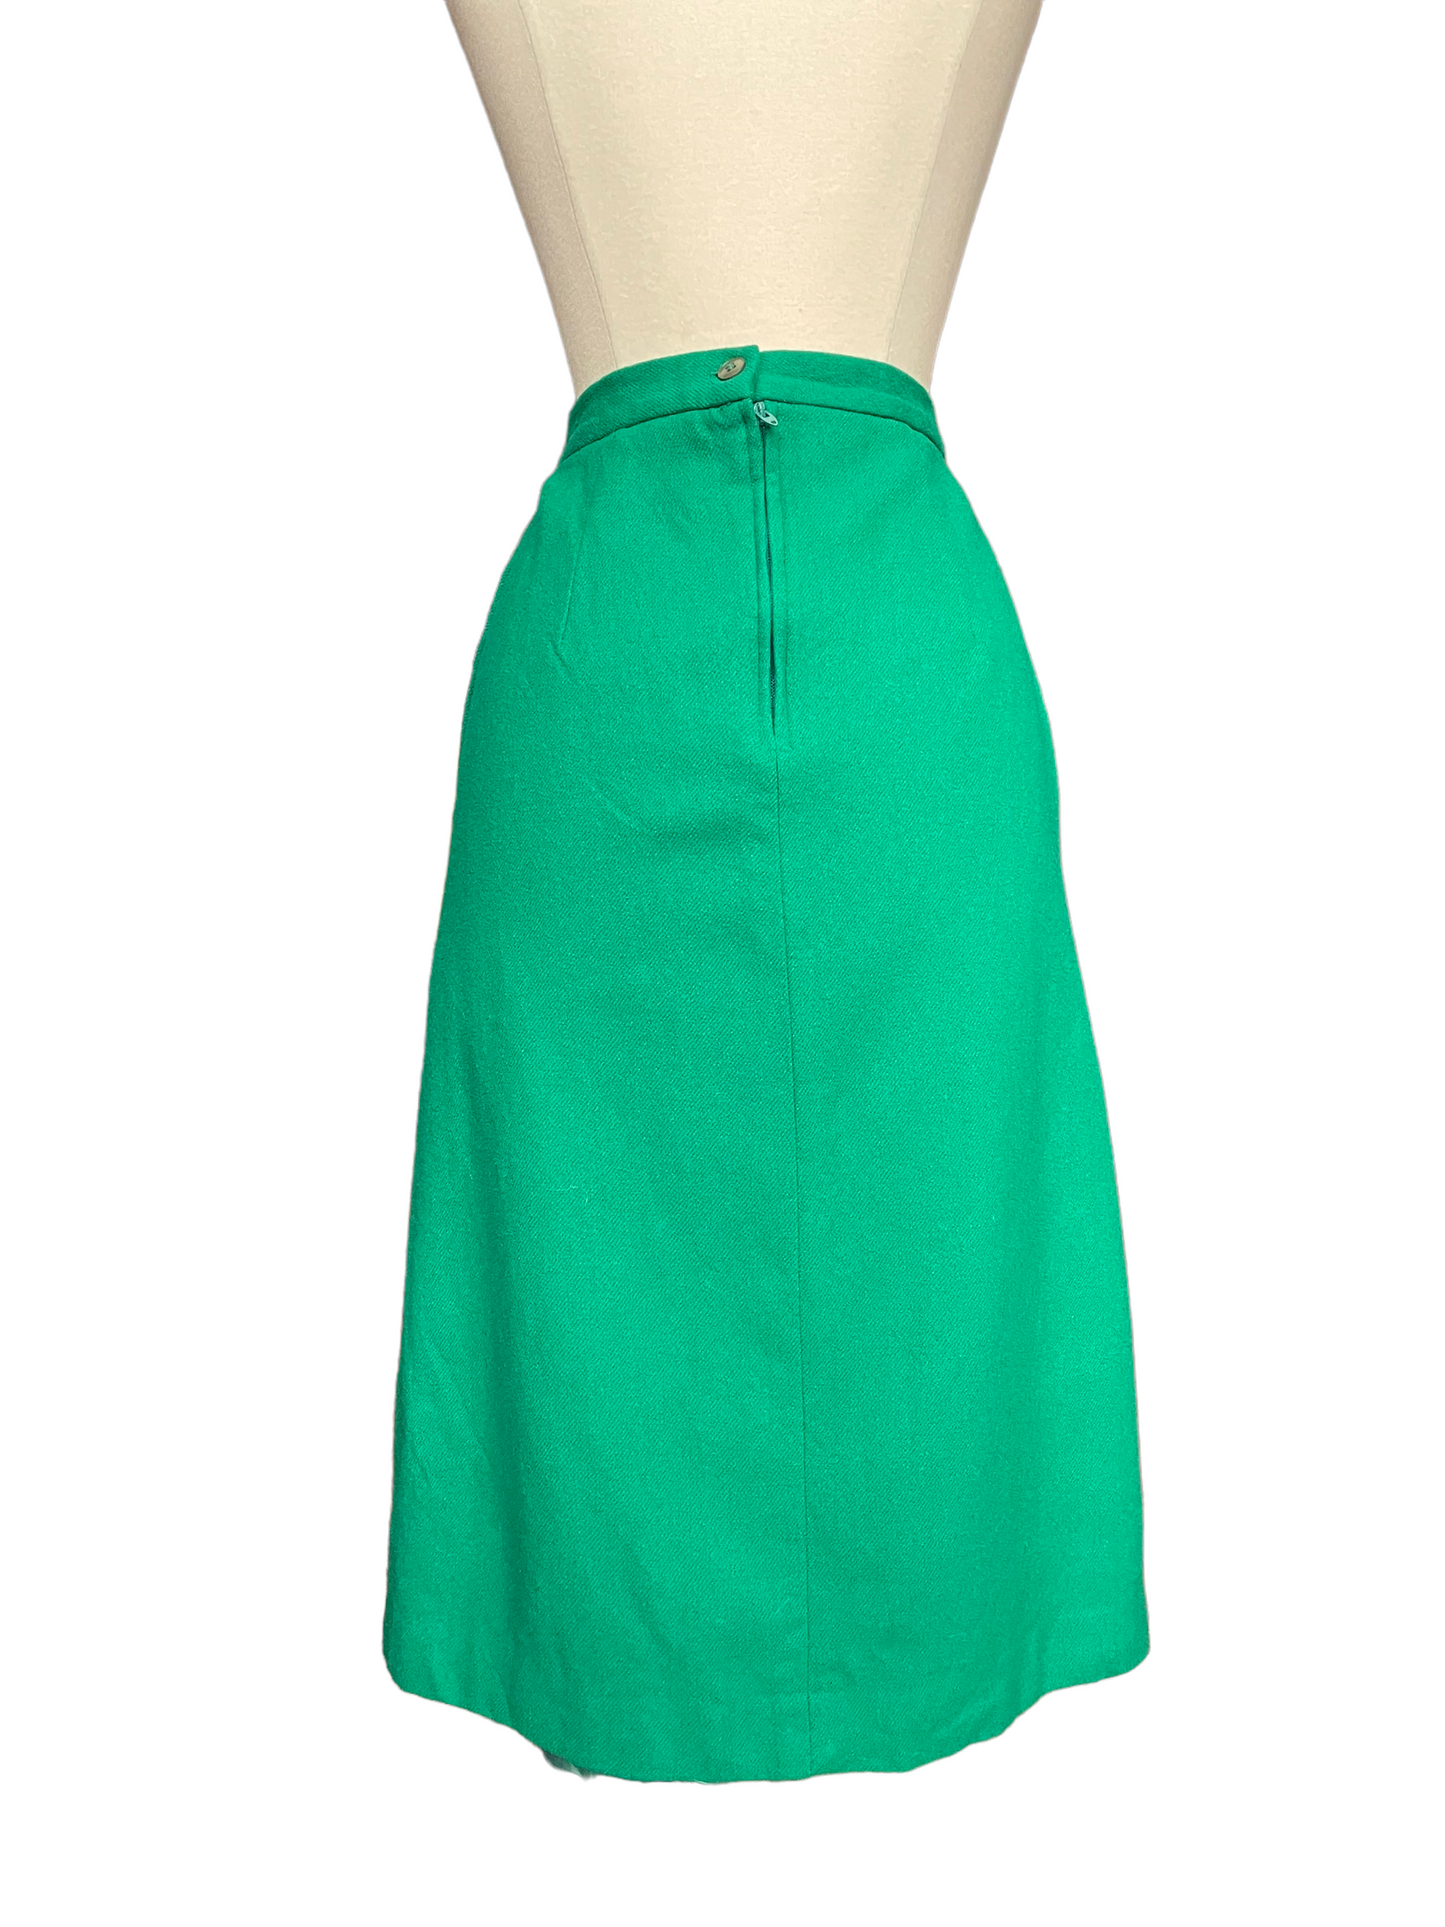 Full back view of Vintage 1960s Green Wool Pencil Skirt | Barn Owl Vintage | Seattle Vintage Skirts